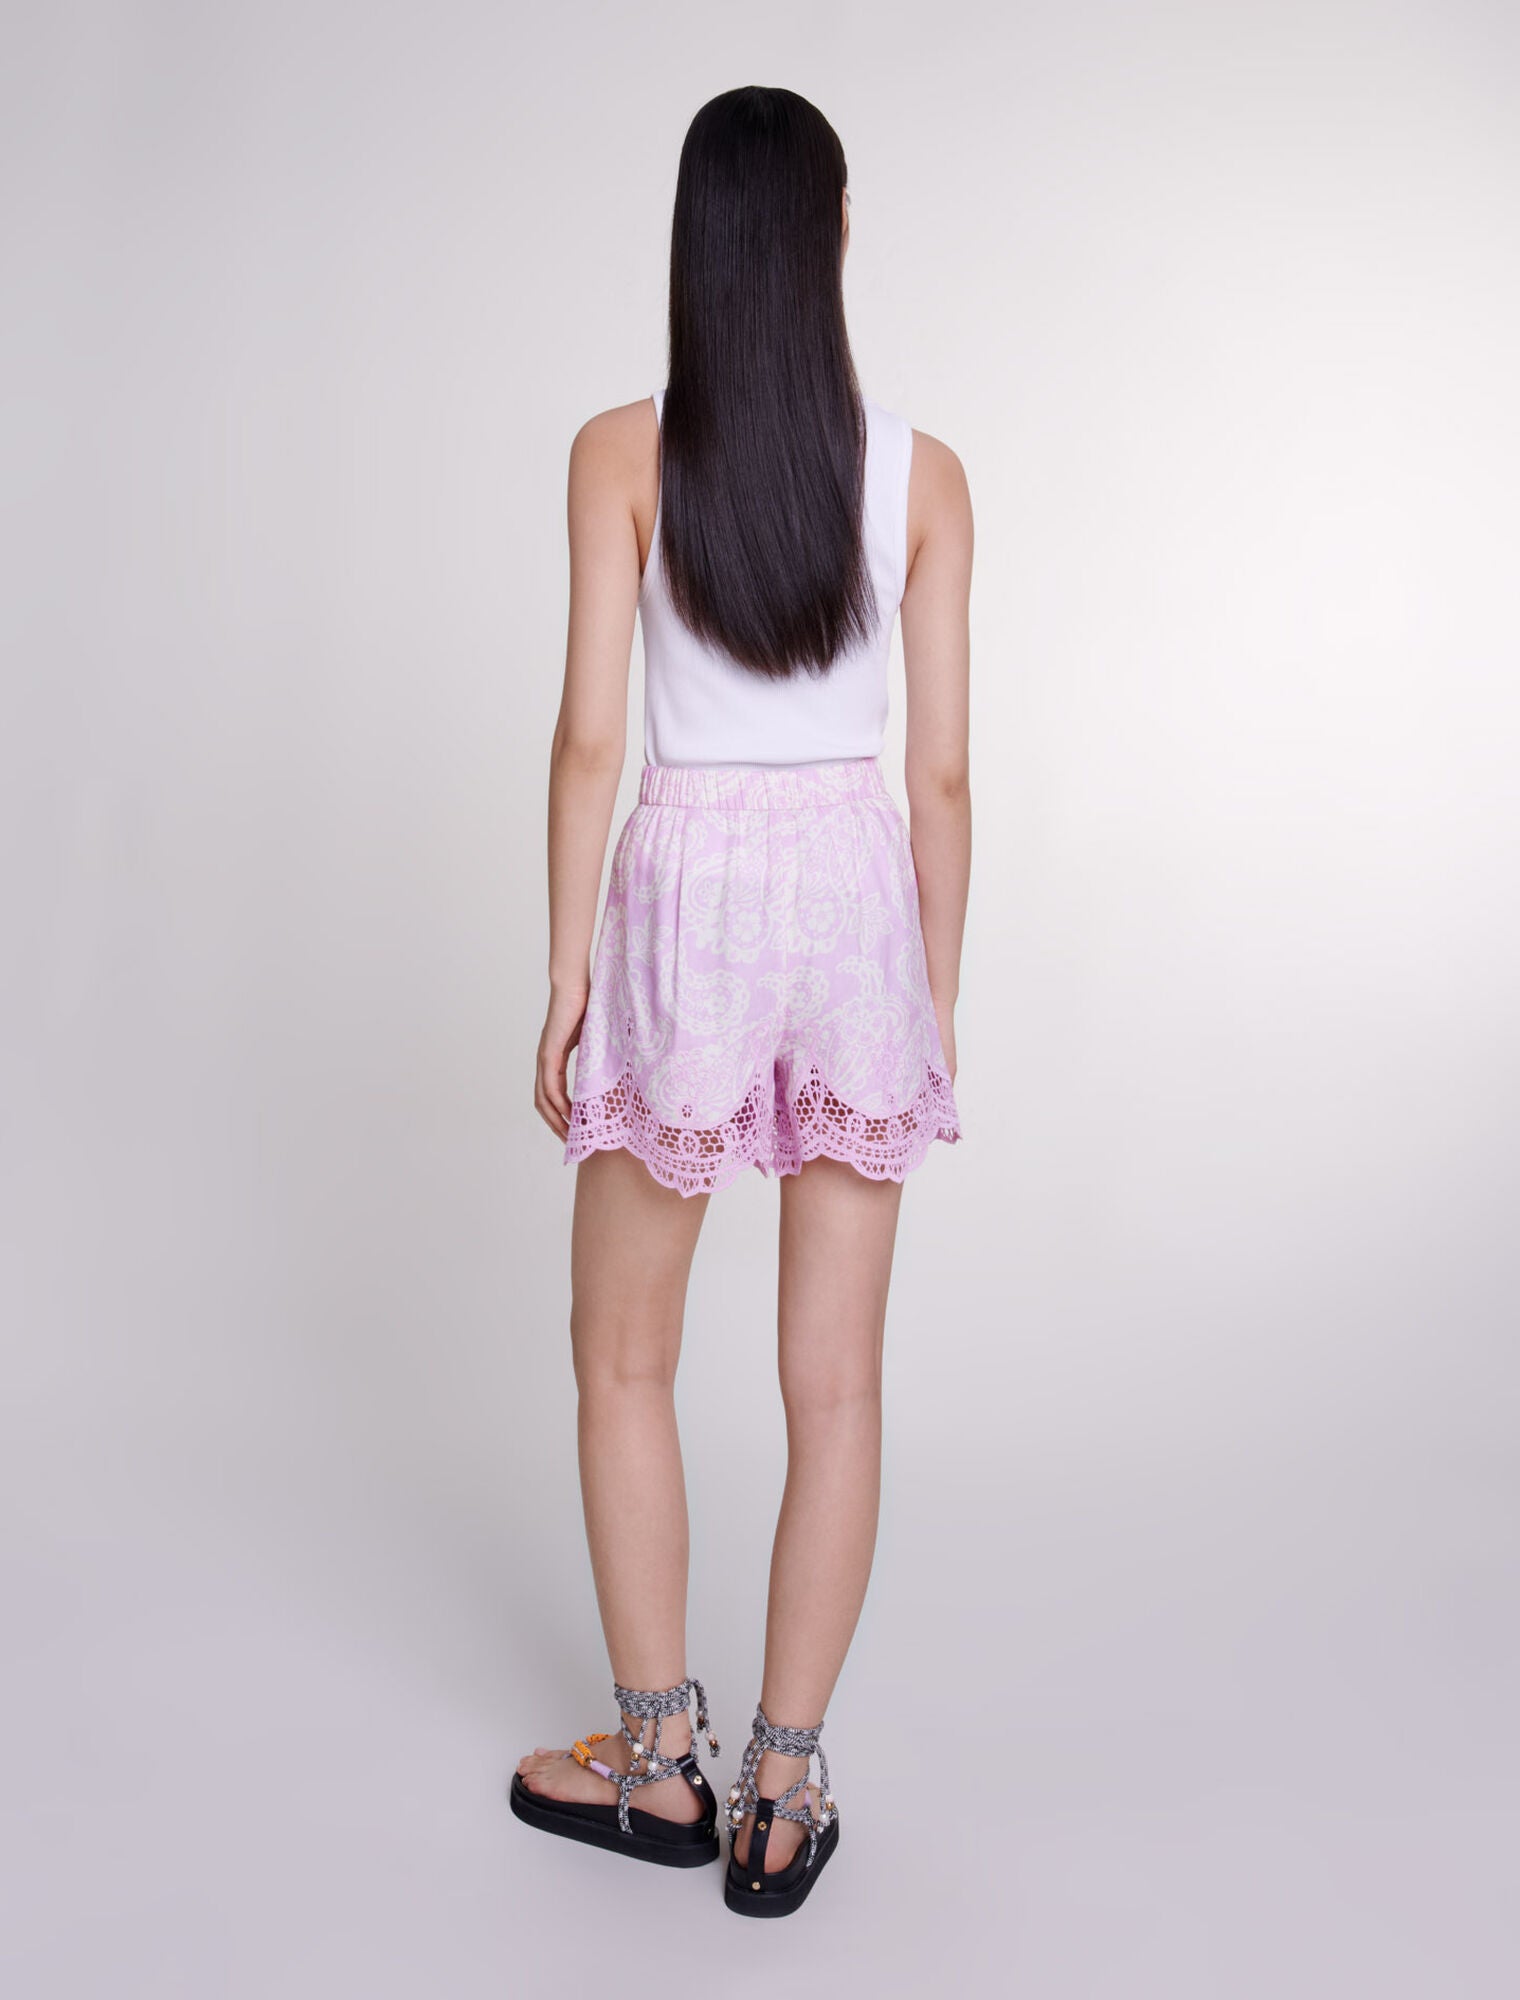 Pink Cashmere Print Patterned linen shorts